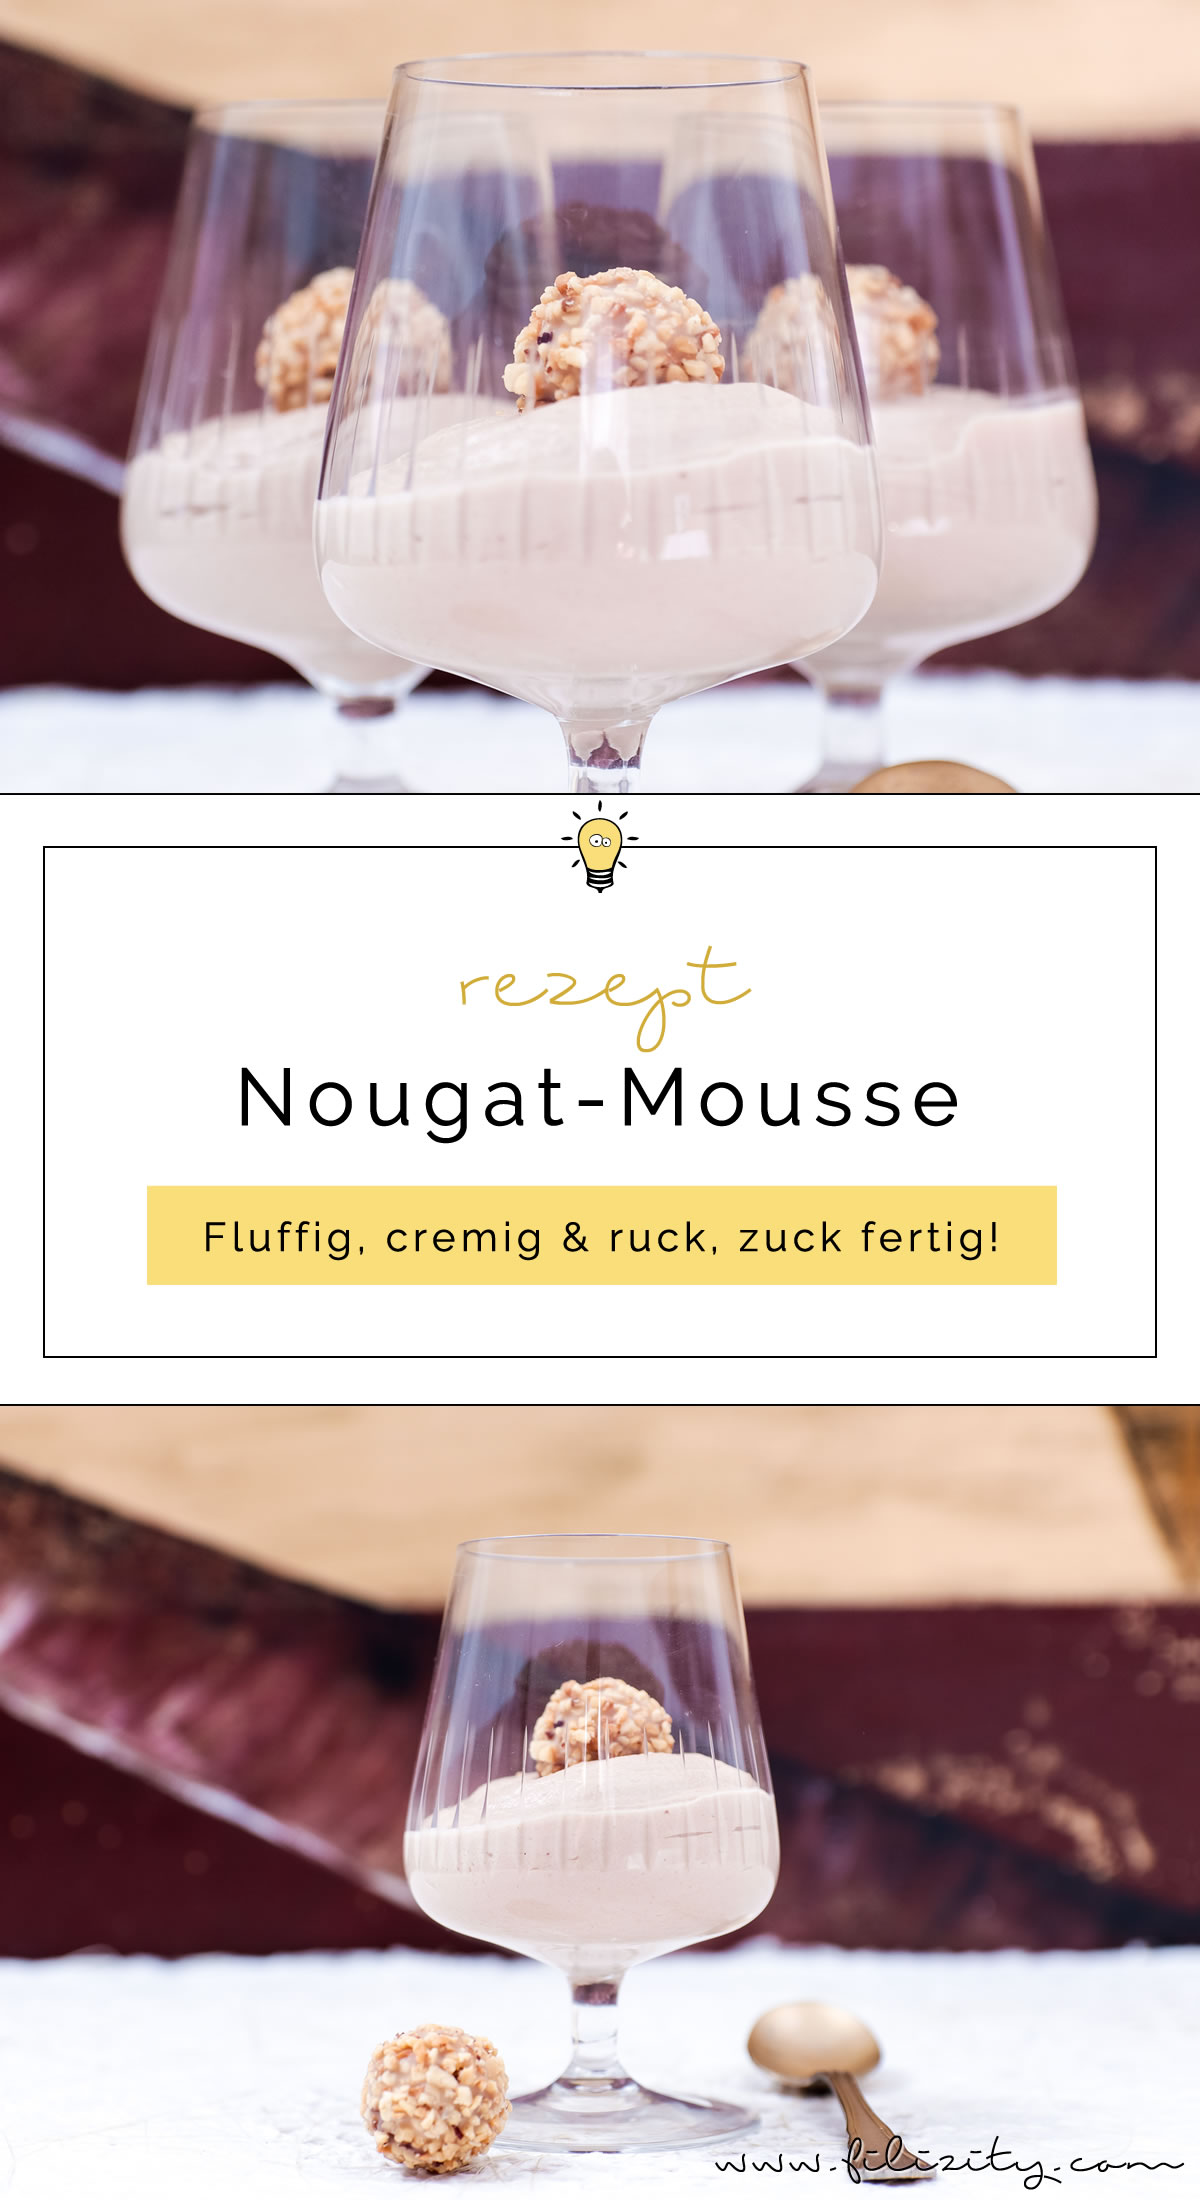 Schnelles Dessert-Rezept: Schoko-Nougat-Mousse mit Quark | Filizity.com | Food-Blog aus dem Rheinland #dessert #nougat